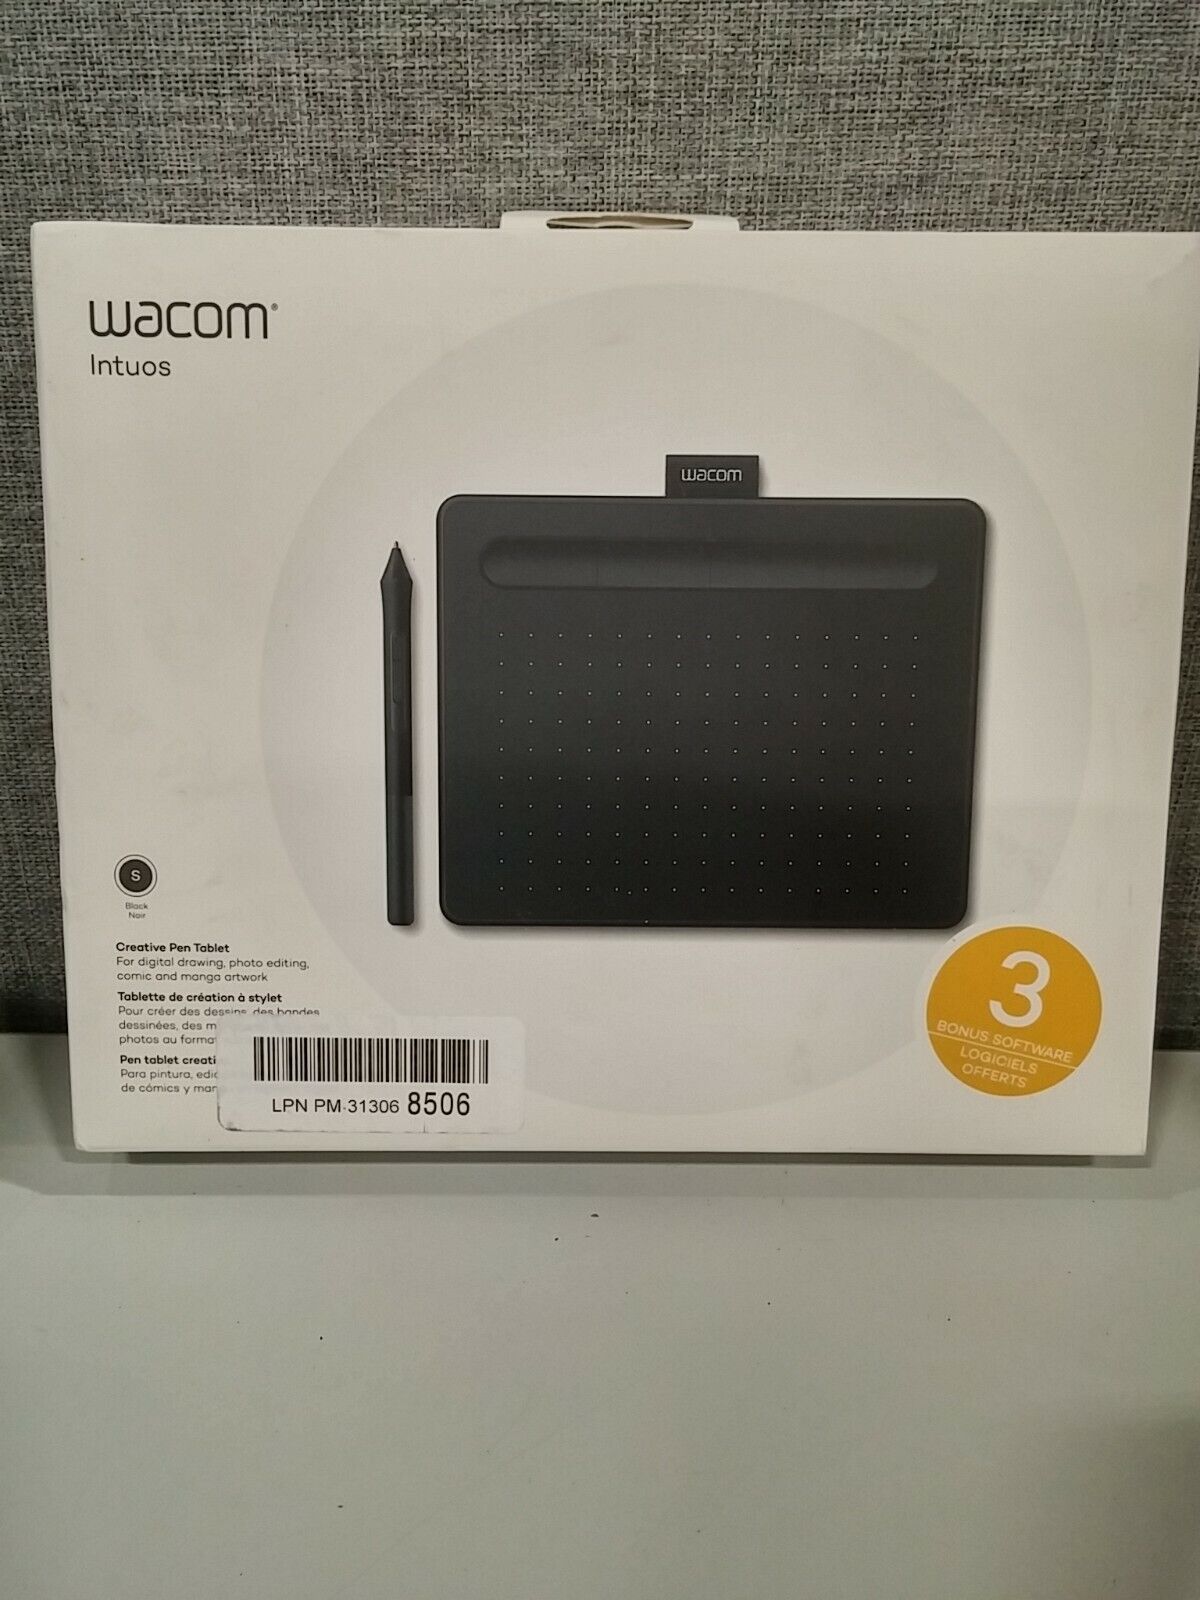 Wacom Intuos CTL-4100 Small Drawing Tablet - Black